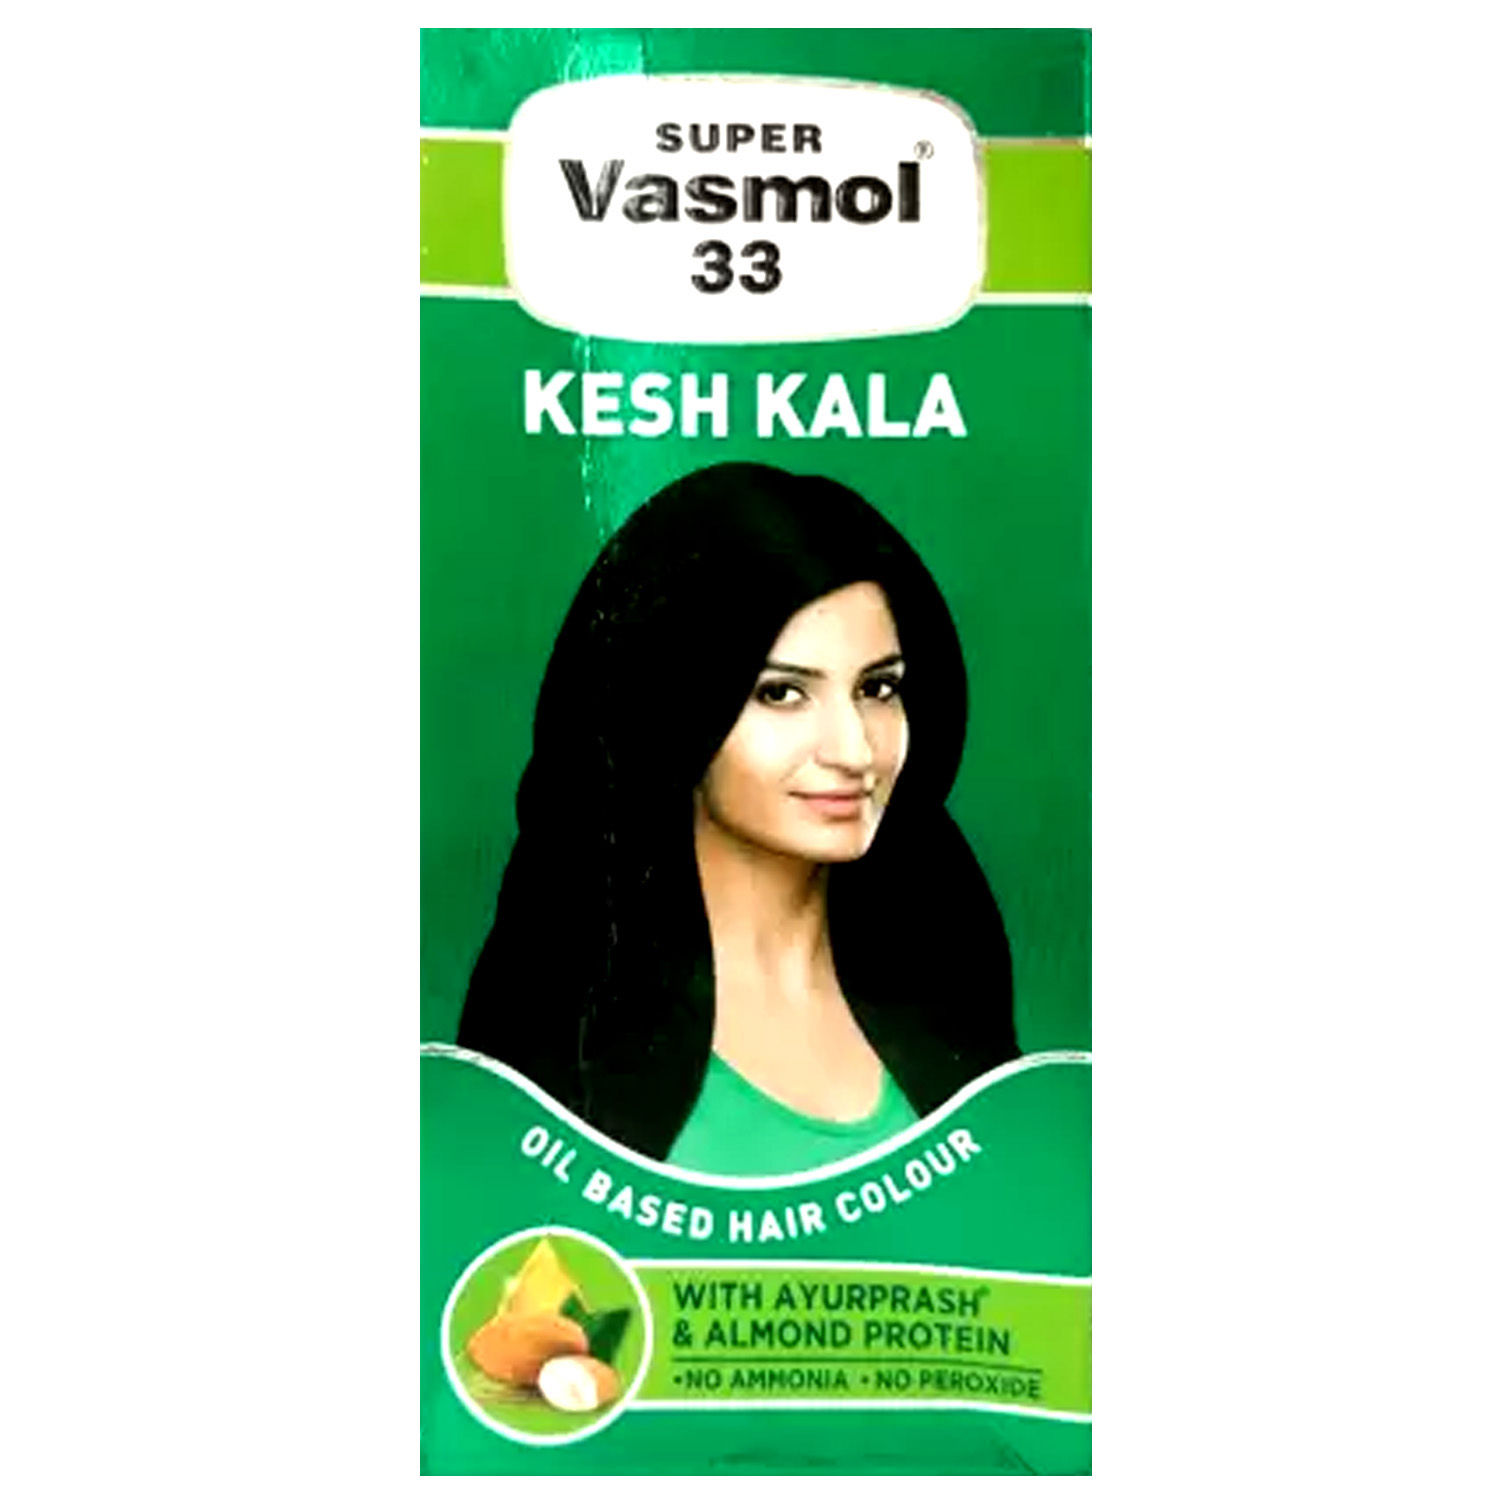 Super Vasmol 33 Kesh Kala Hair Oil, 100 ml Price, Uses, Side Effects,  Composition - Apollo Pharmacy